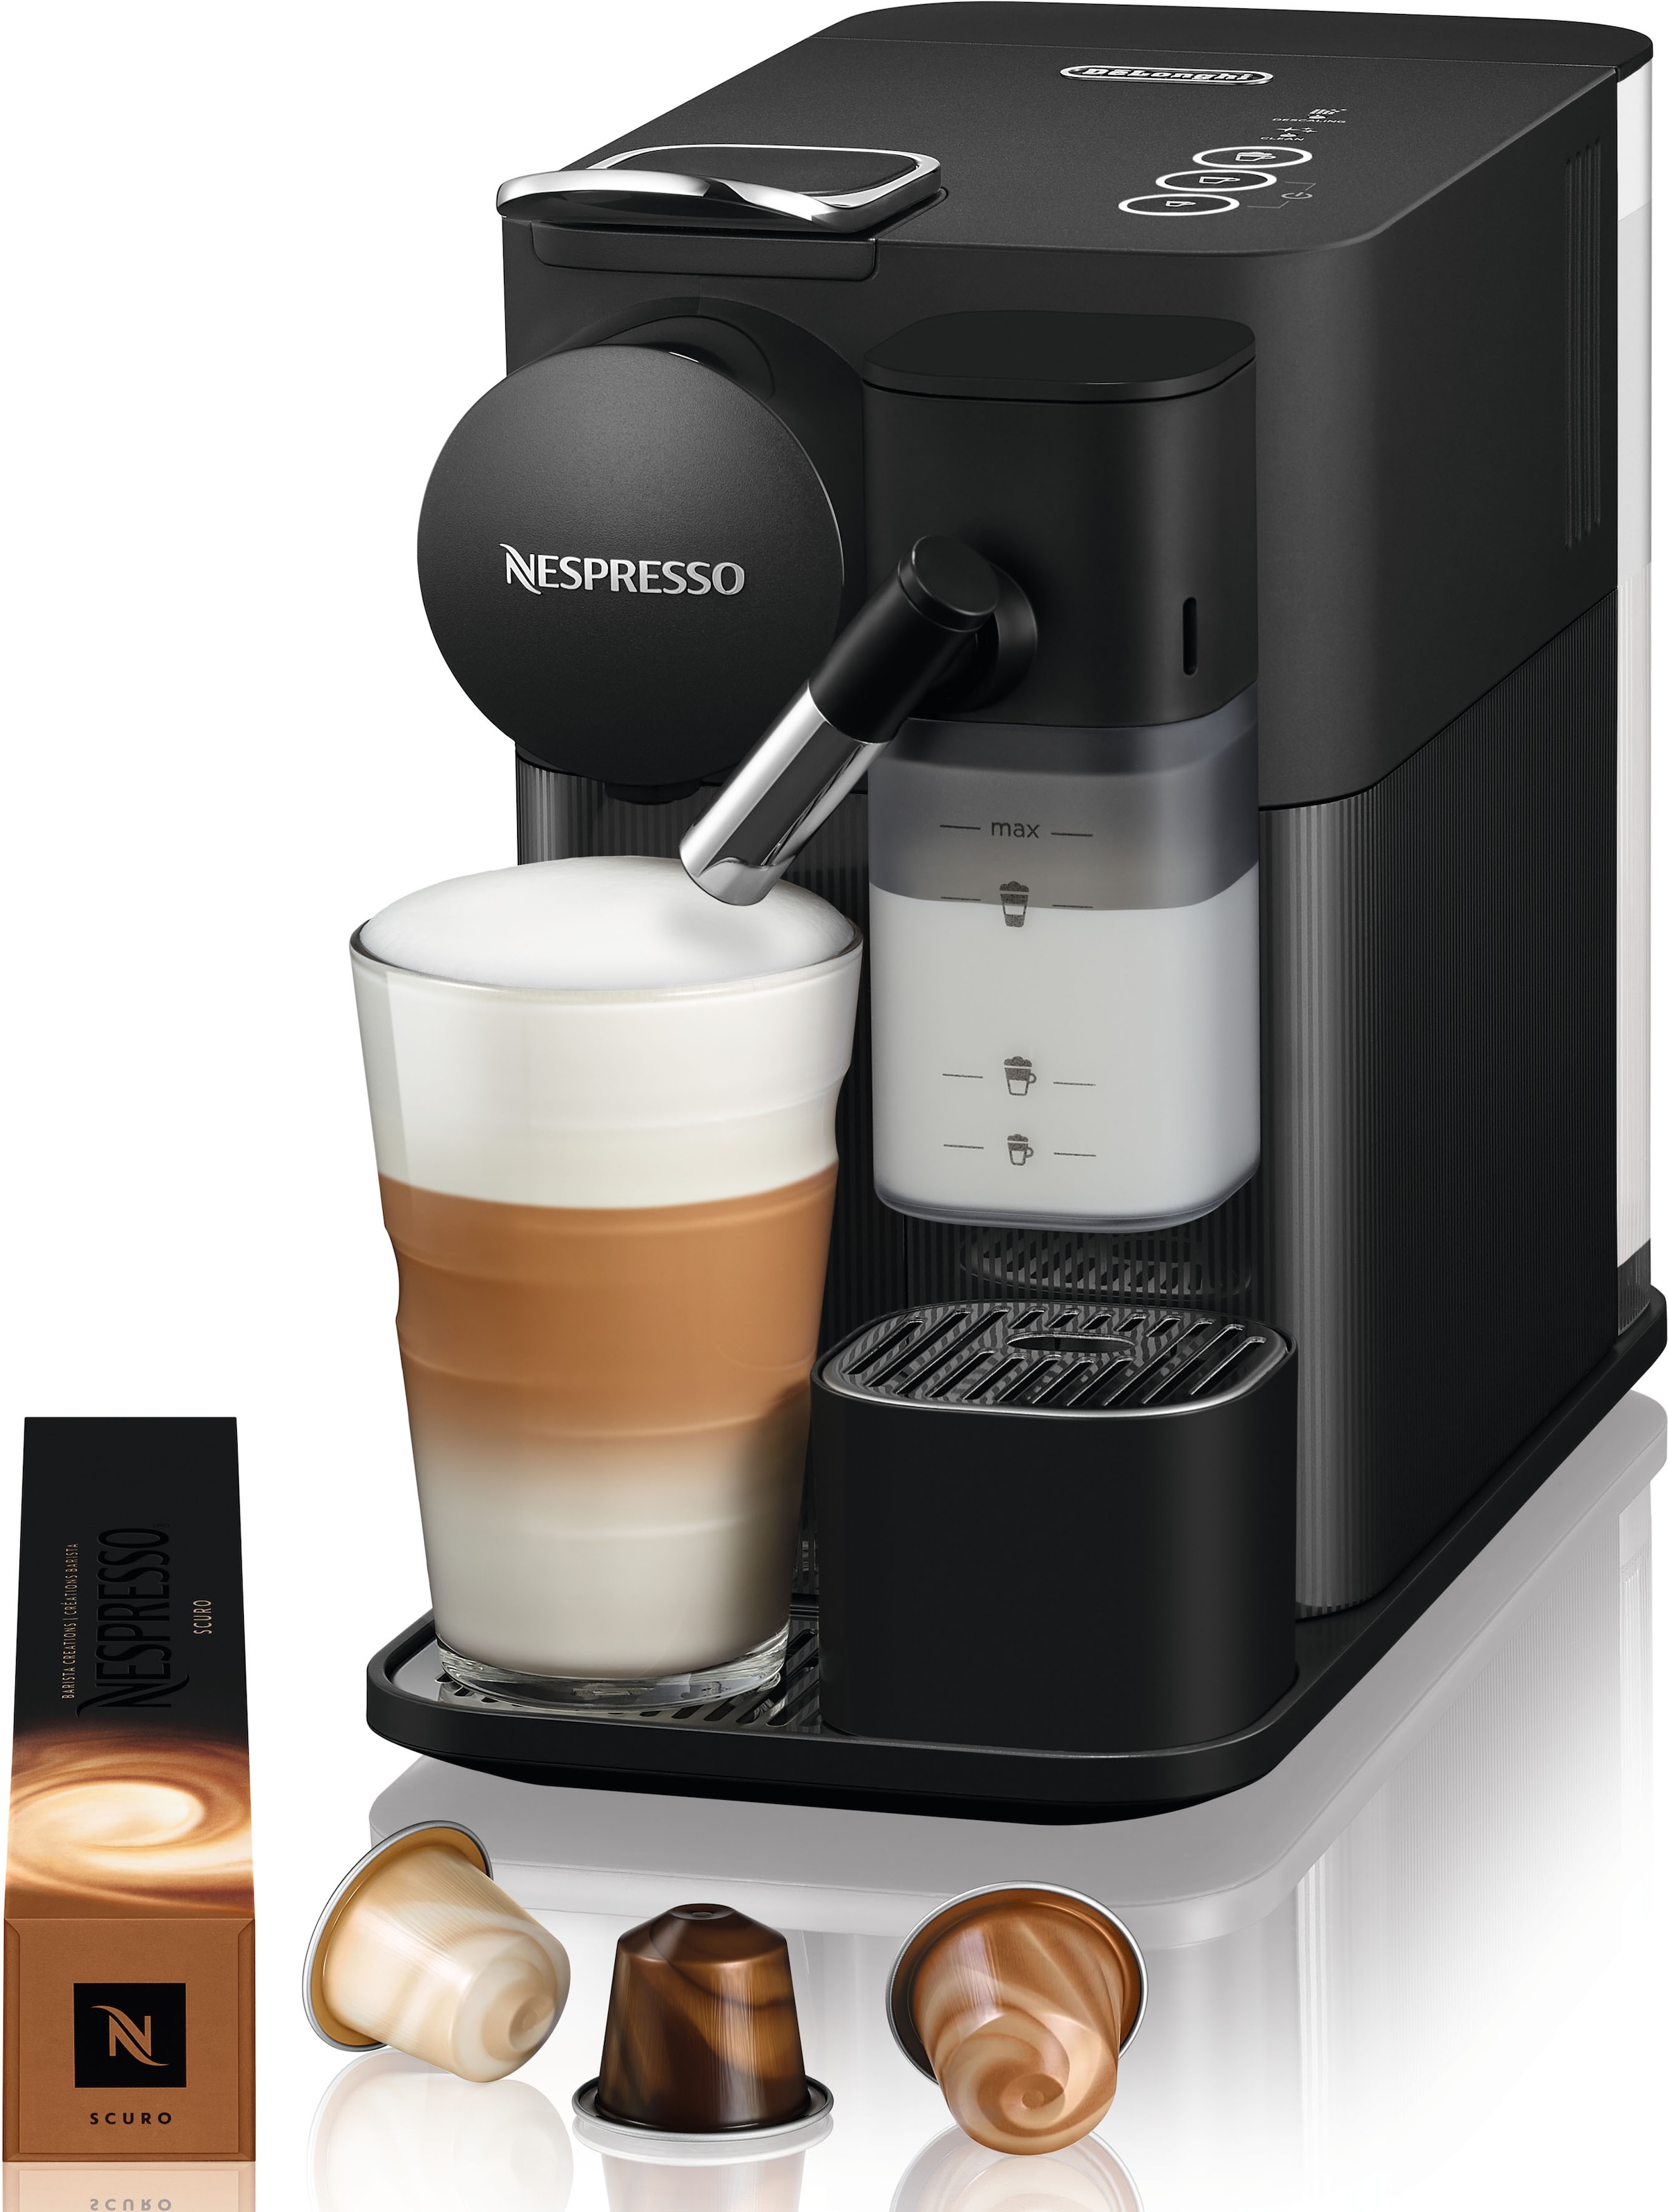 Nespresso Kapselmaschine "Lattissima One EN510.B von DeLonghi, Black", inkl. Willkommenspaket mit 7 Kapseln